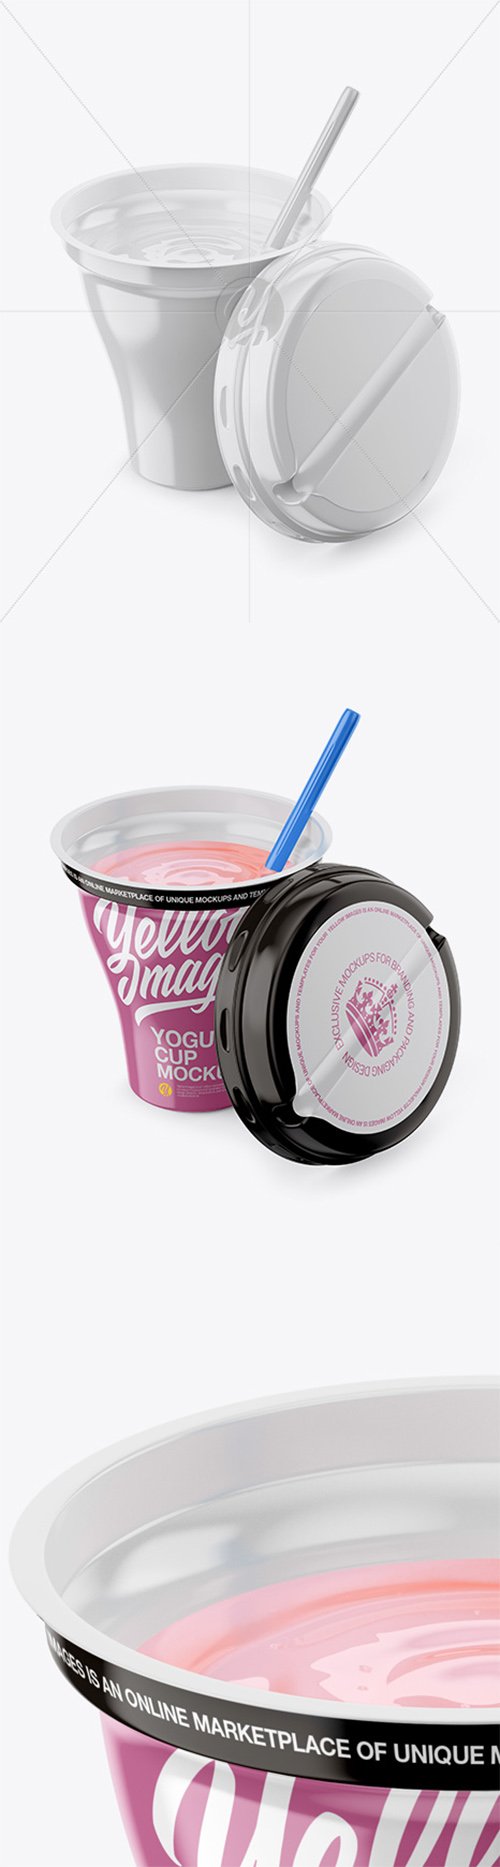 Opened 260g Yogurt Cup With Straw Mockup - Half Side View 21568 TIF